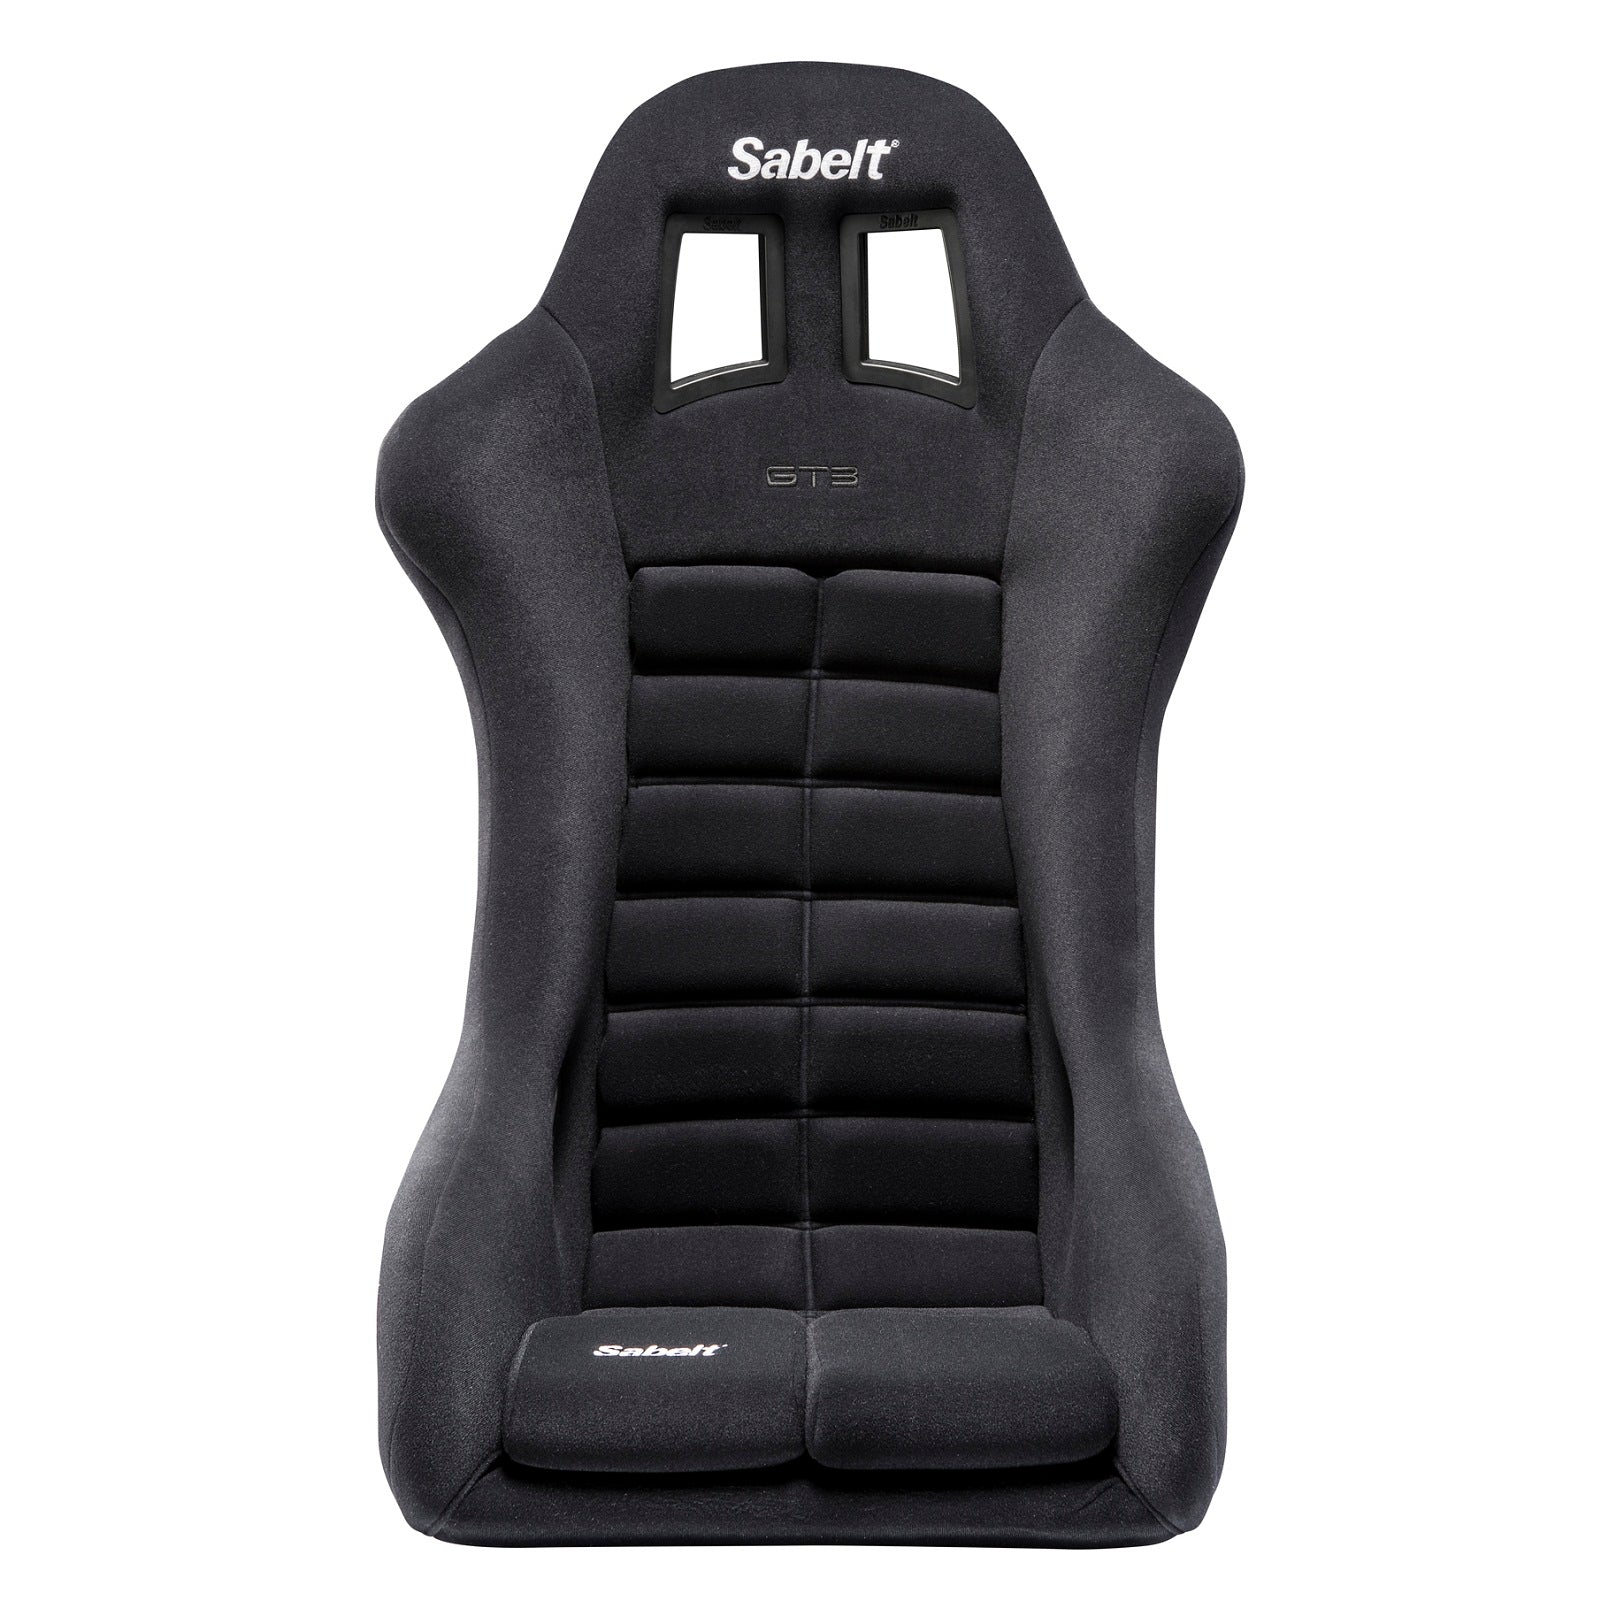 Sabelt GT3 FIA Approved Seat – Mann Engineering